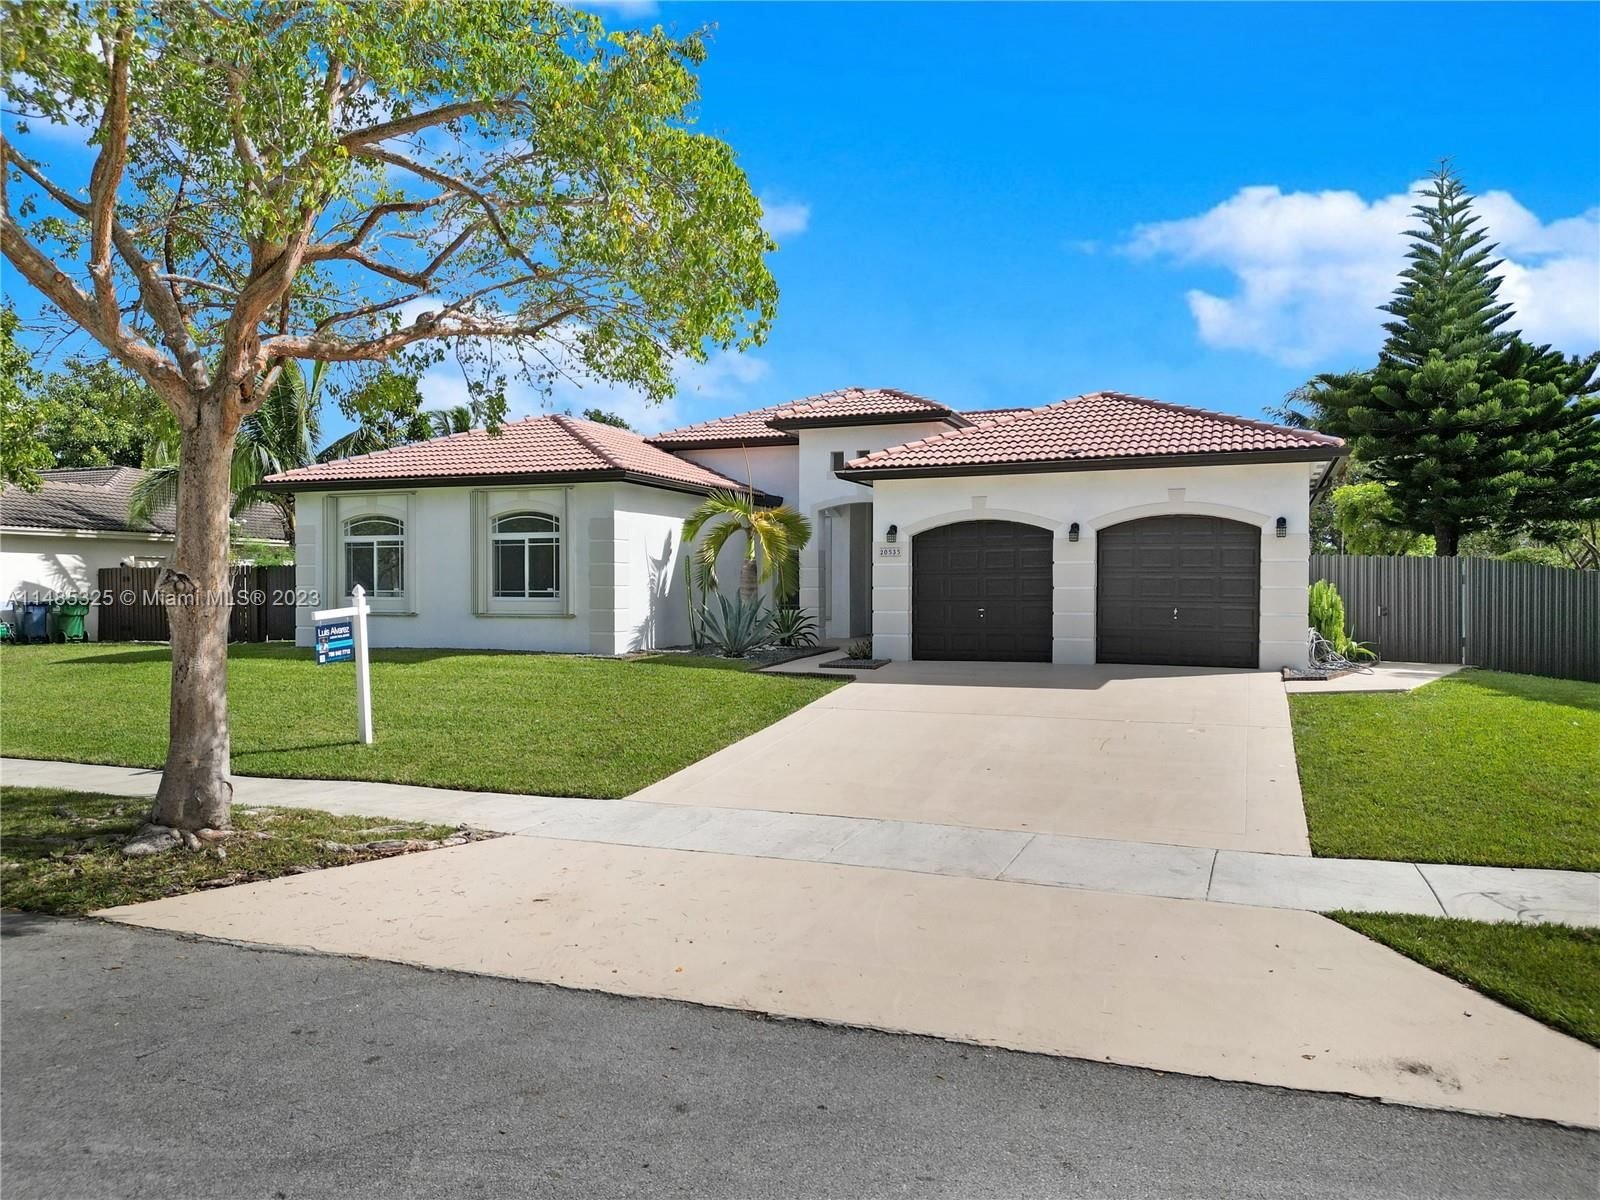 Real estate property located at 20535 133rd Ct, Miami-Dade County, SEA PINES ESTATES, Miami, FL